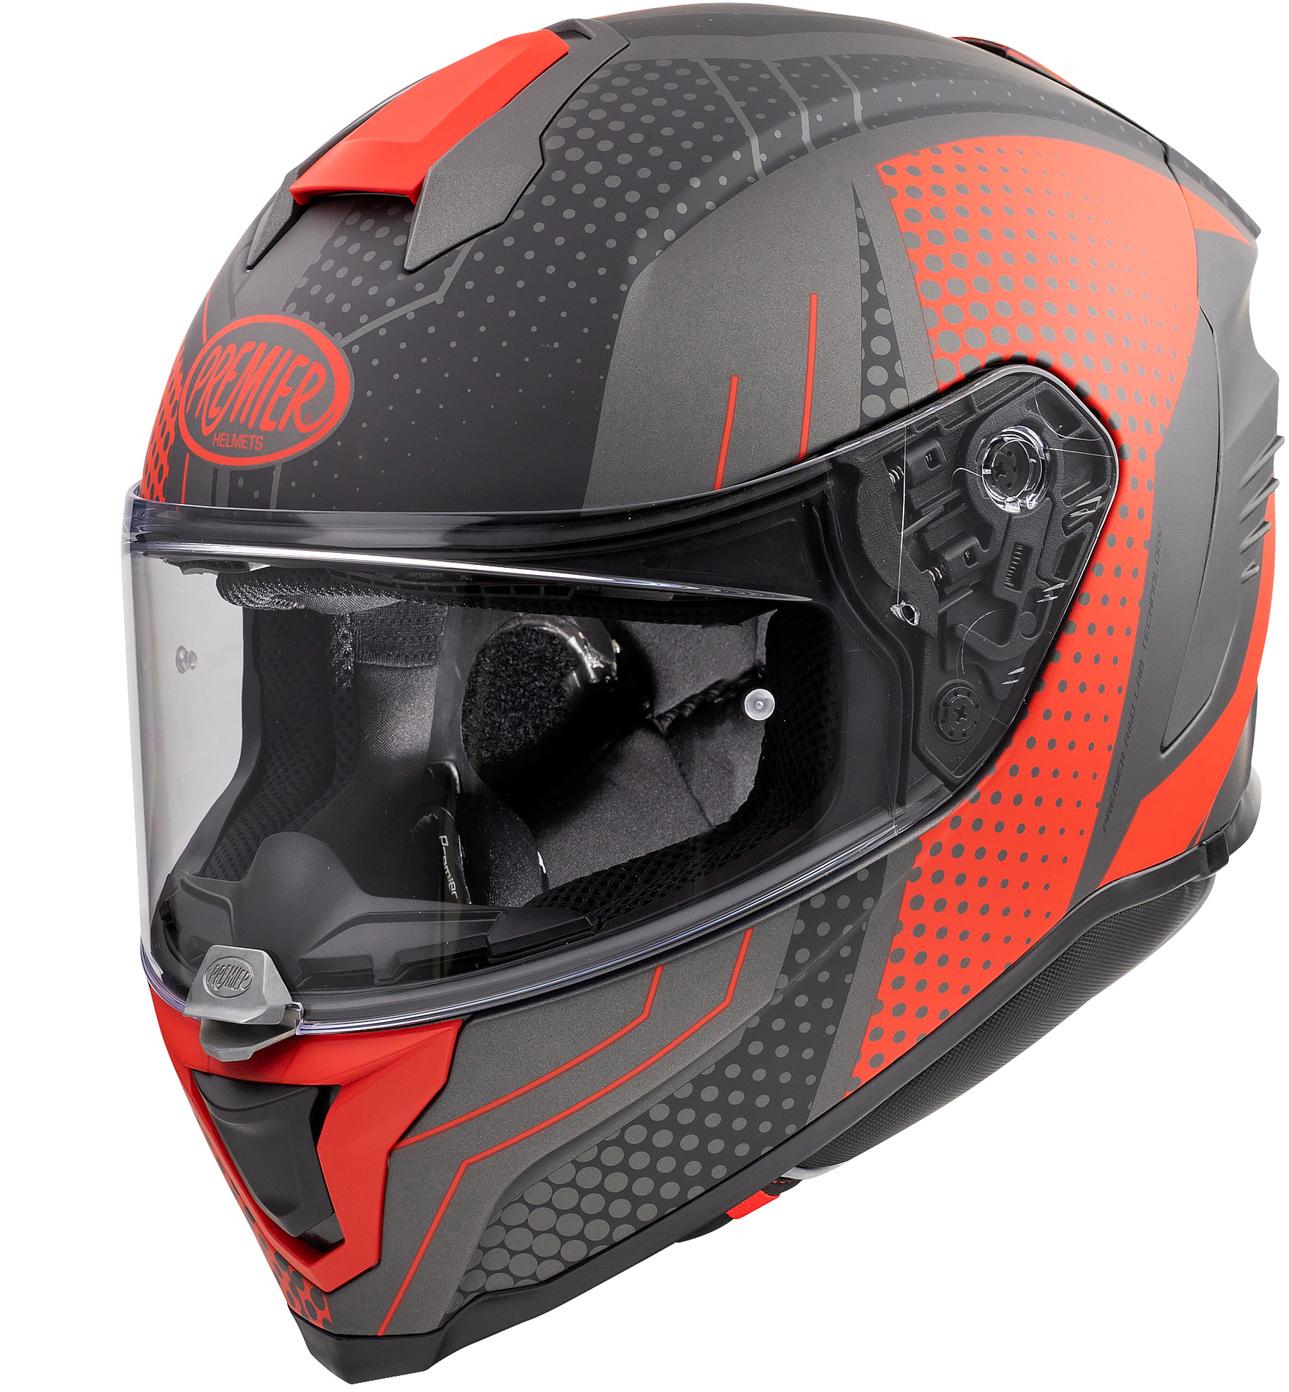 Premier Hyper Bp Full Face Motorcycle Helmet - Black/Red, Xl